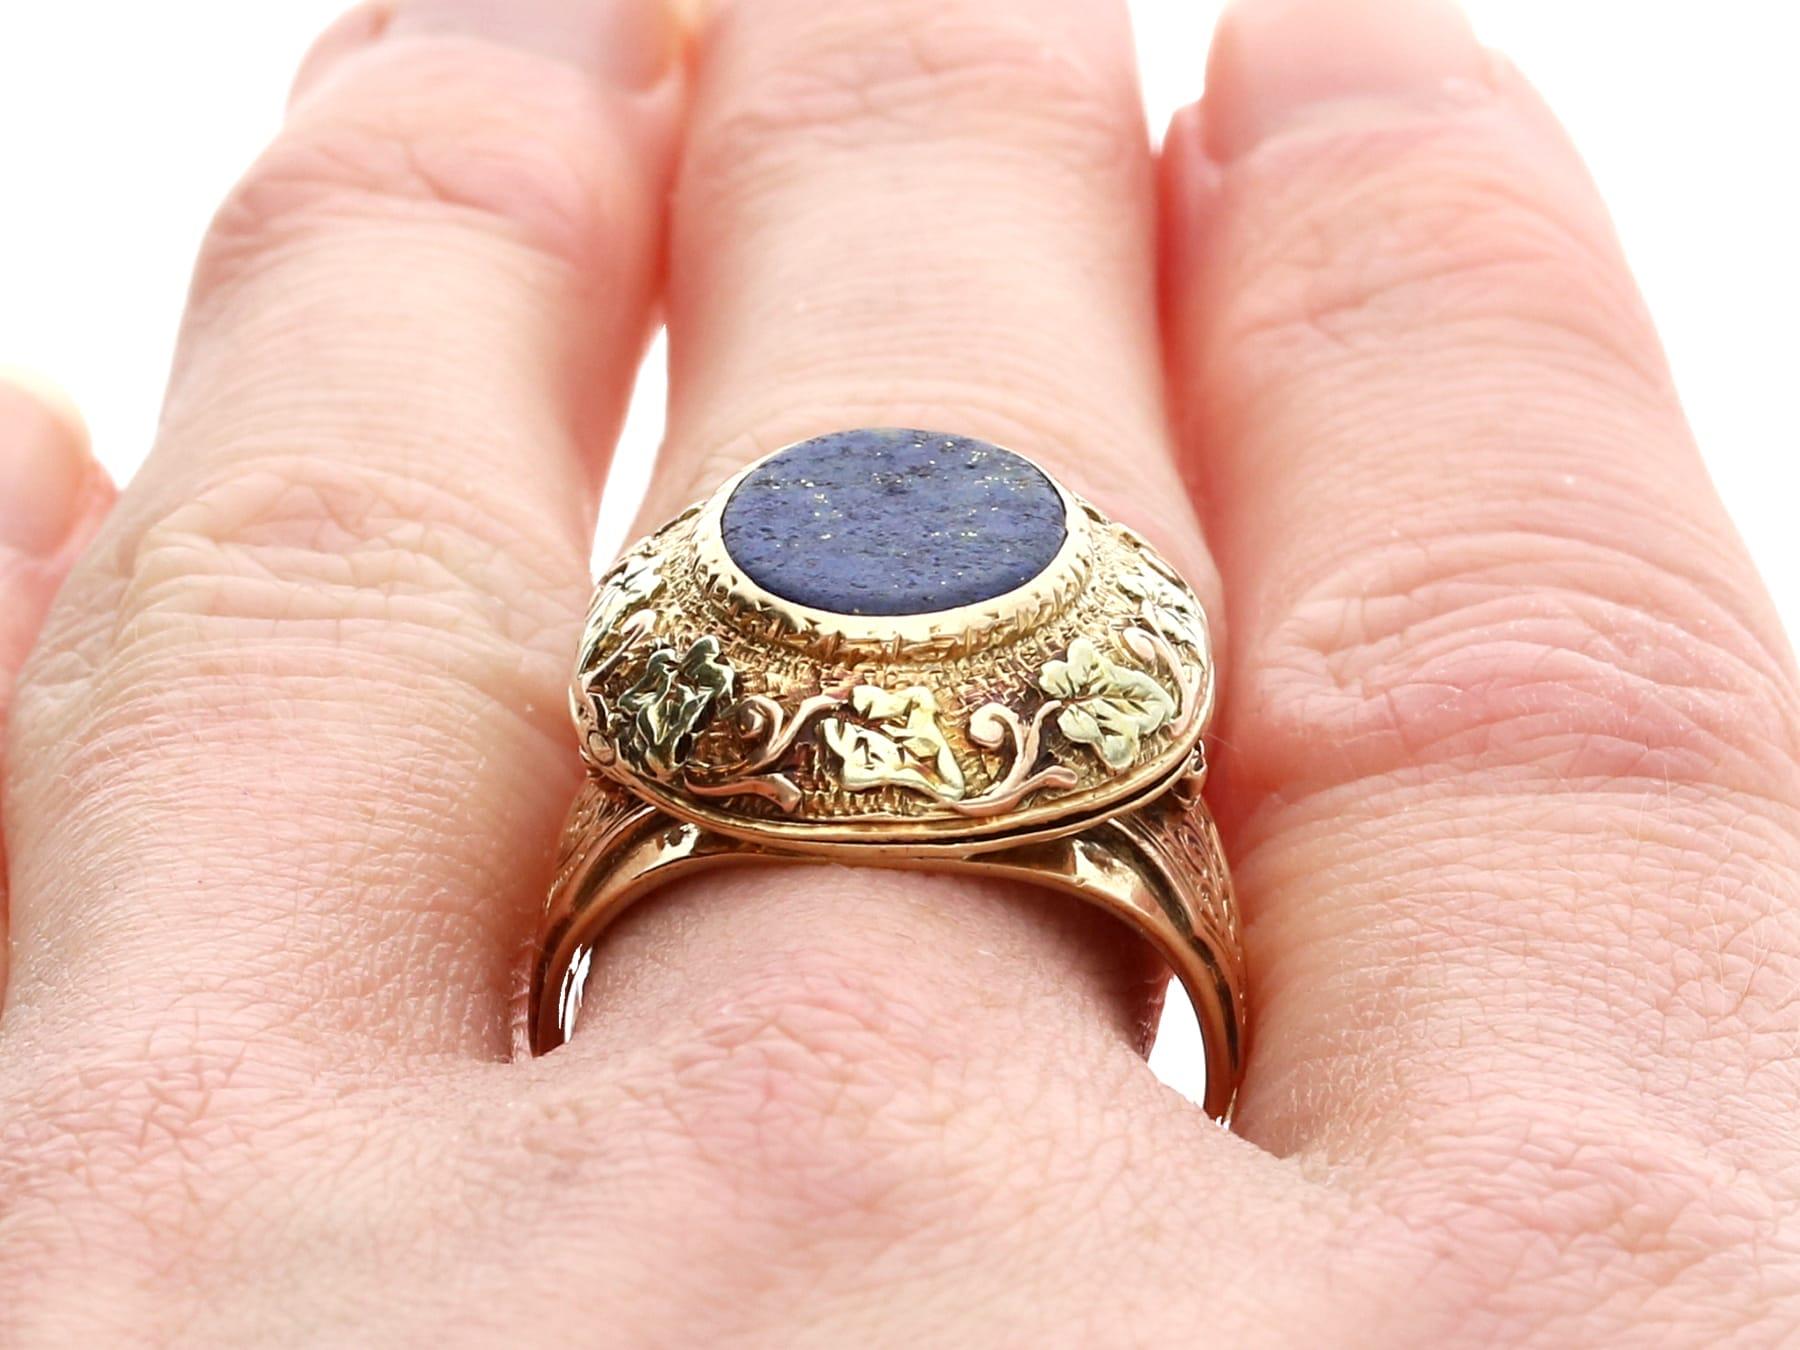 Antique 3.02Ct Lapis Lazuli and 15k Yellow Gold Locket Ring Circa 1880 For Sale 9